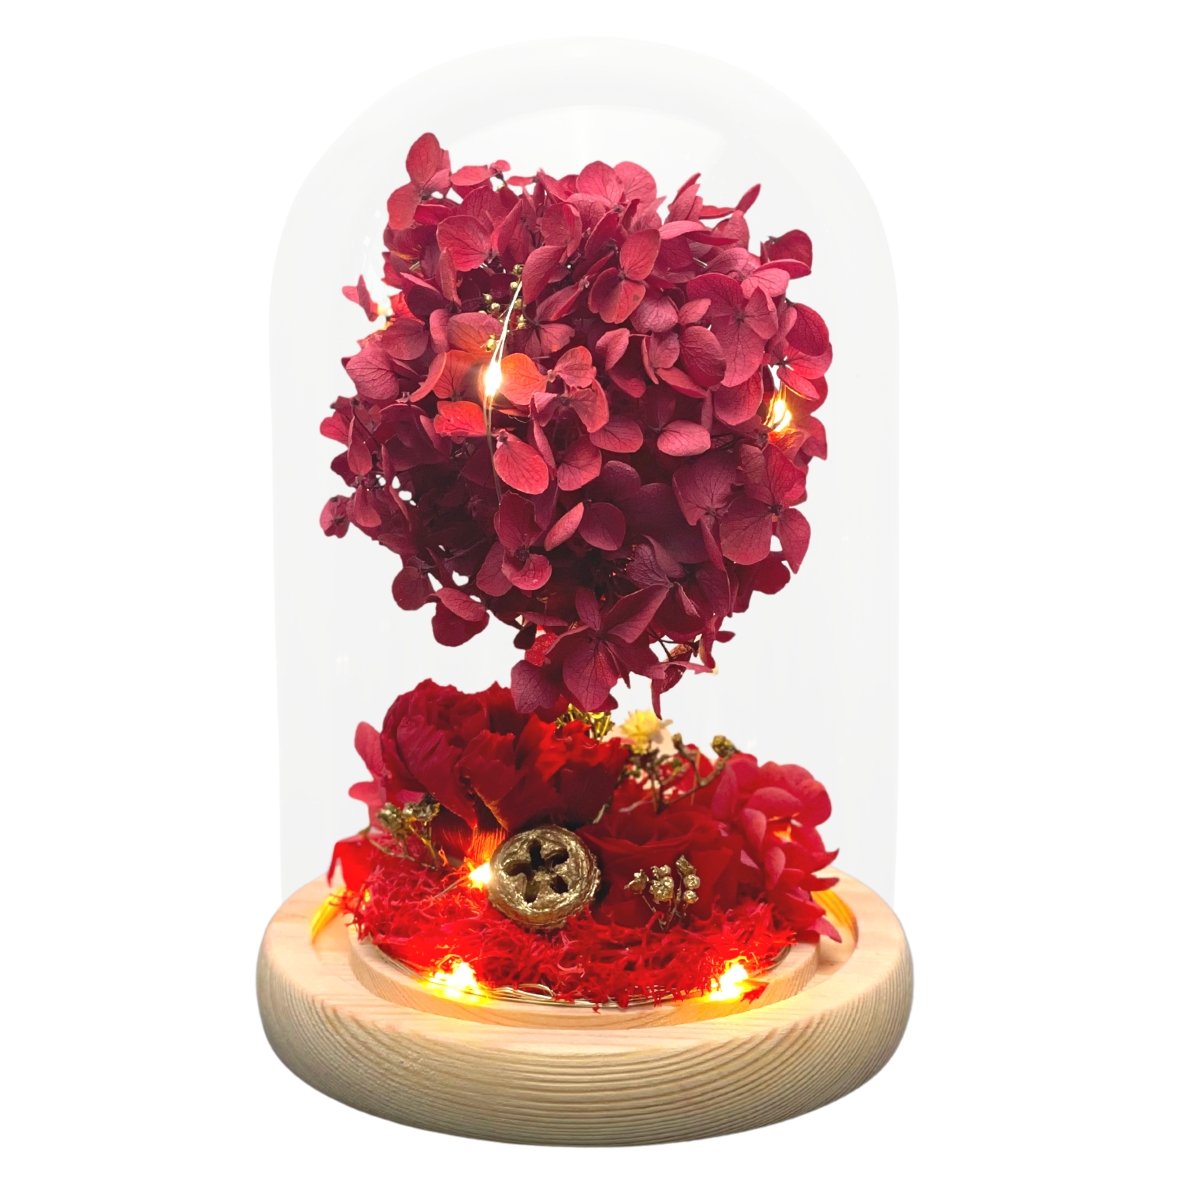 Hydarium Dome - Flower - Red あじさい - Preserved Flowers & Fresh Flower Florist Gift Store